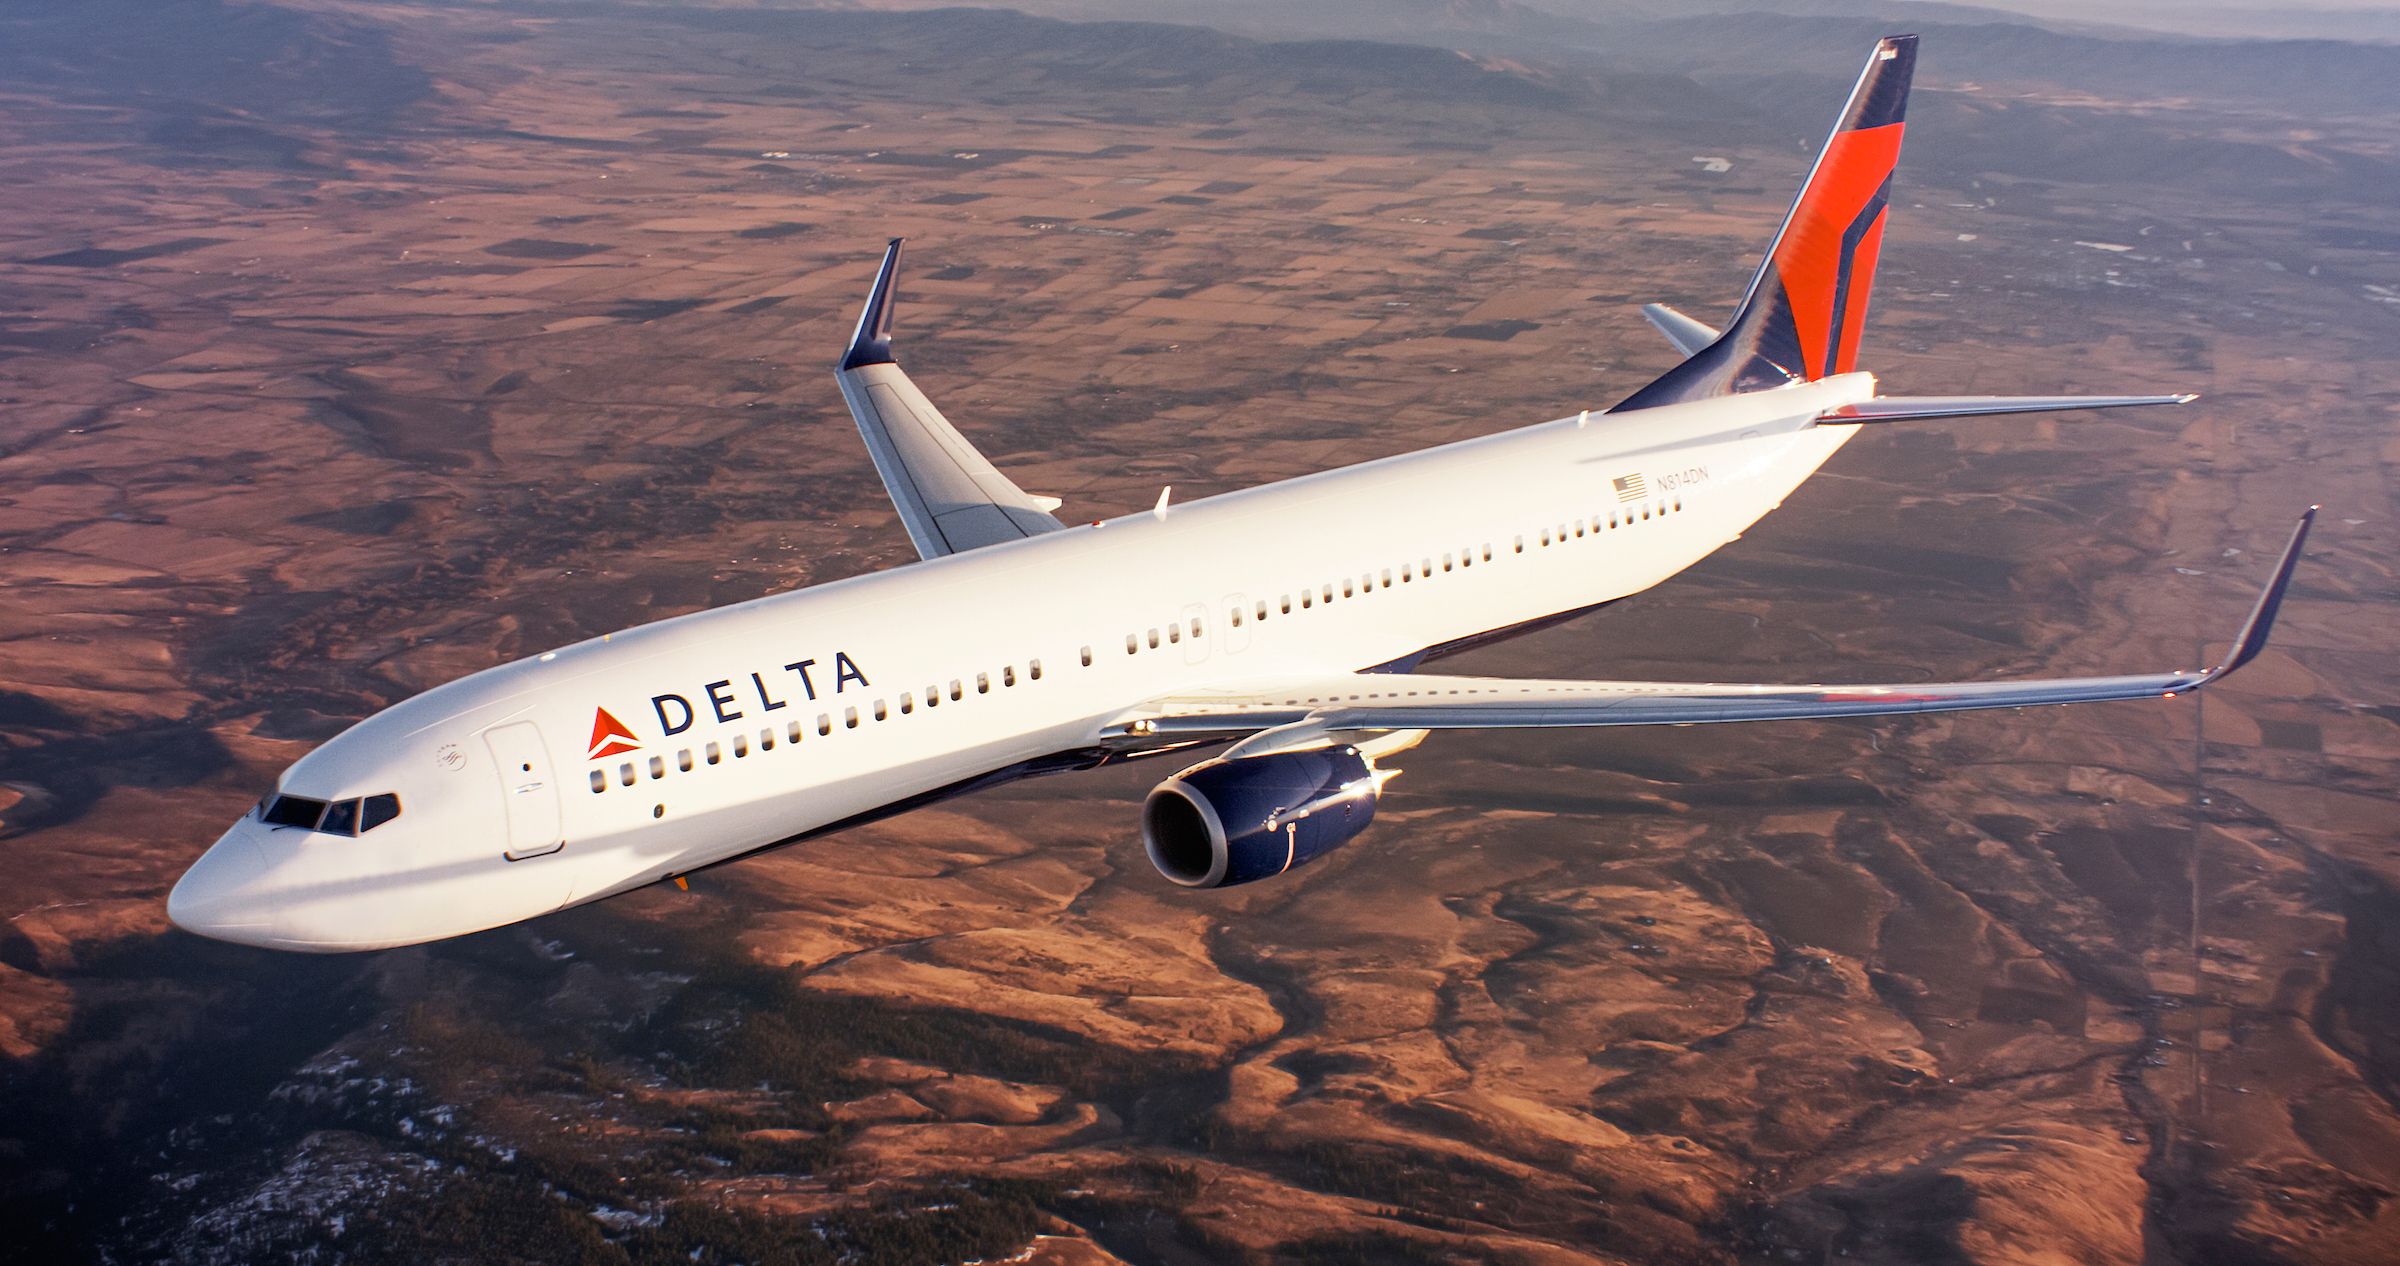 Delta Air Lines Boeing 737-900er With Desert Backdrop